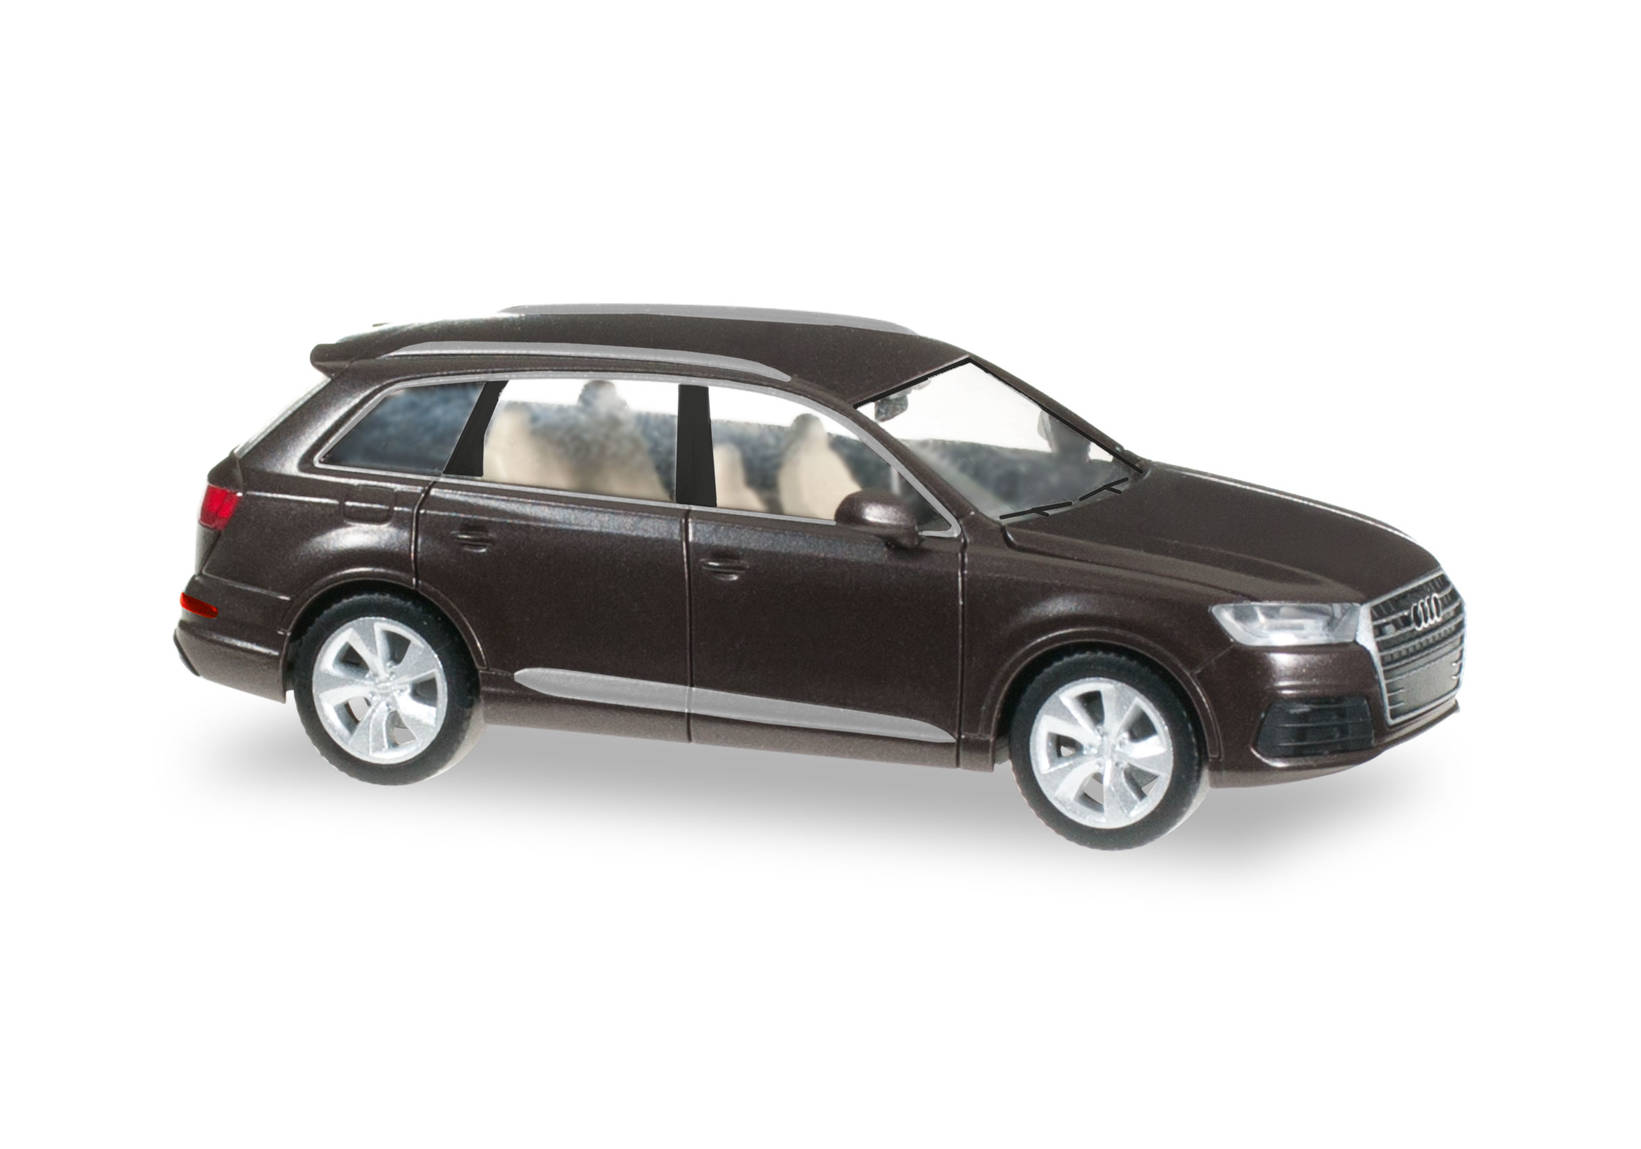 Audi Q7, argus brown metallic